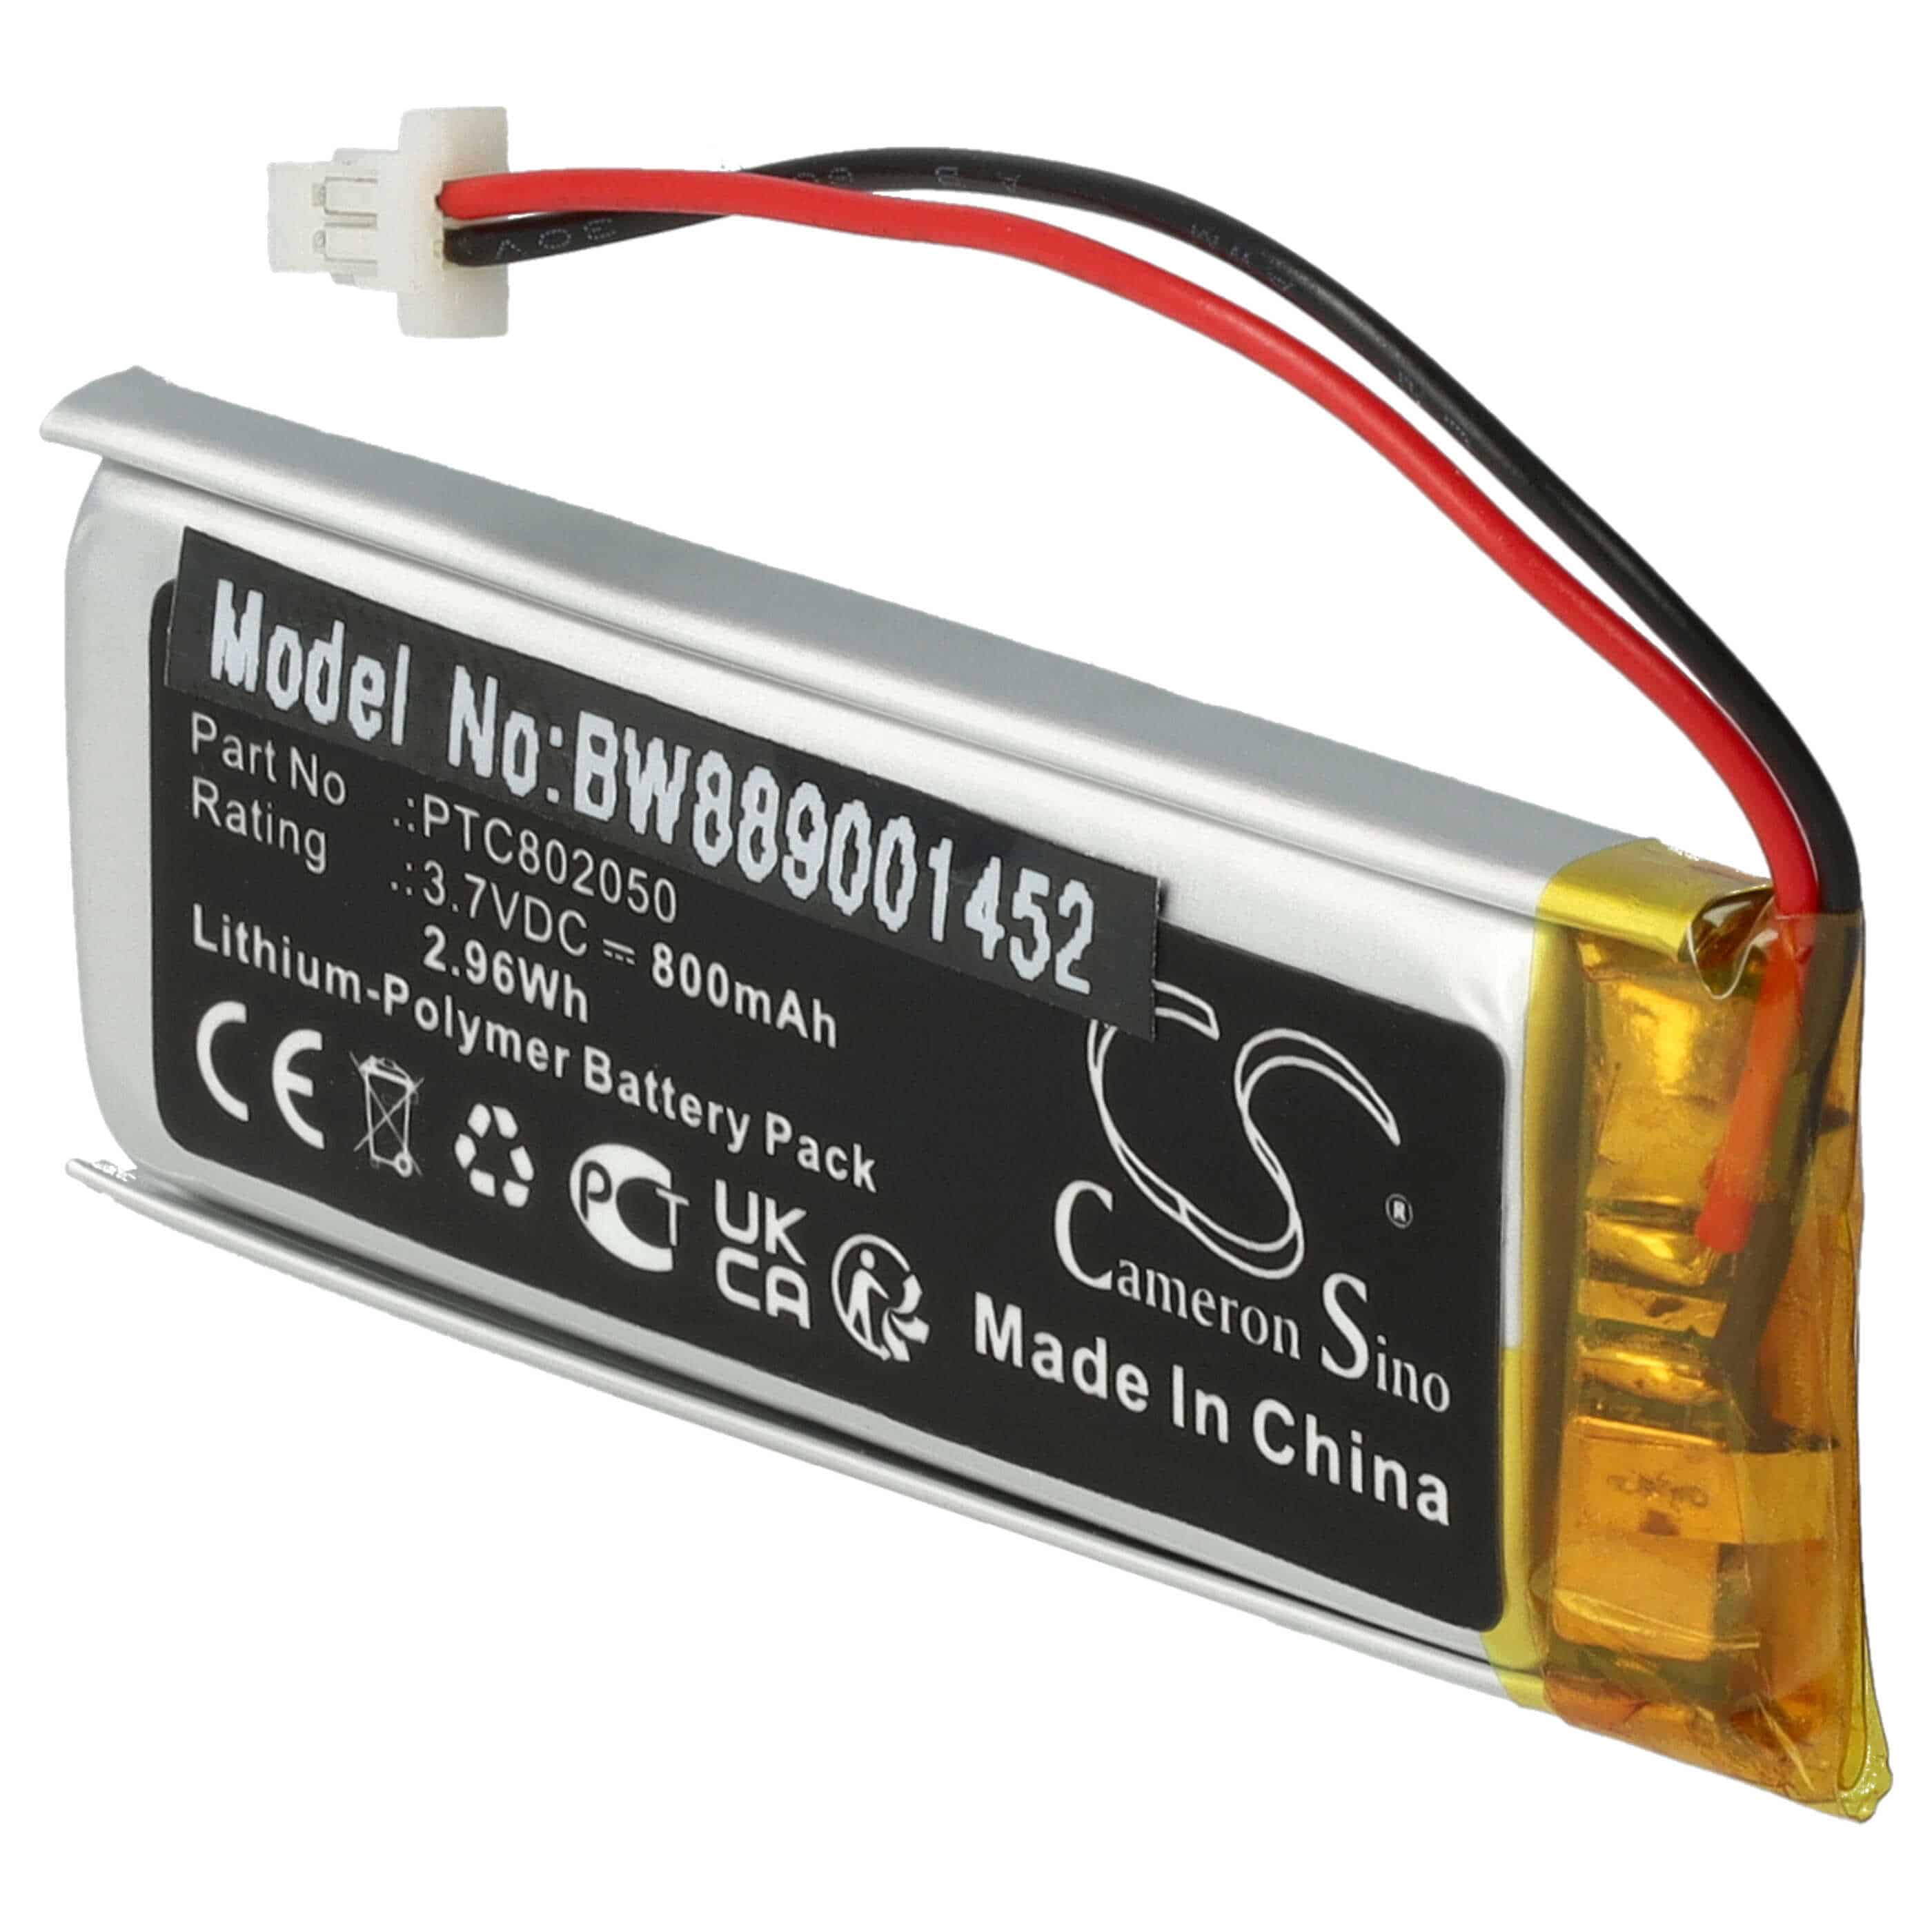 Wireless Headset Battery Replacement for Sena PTC802050 - 800mAh 3.7V Li-polymer